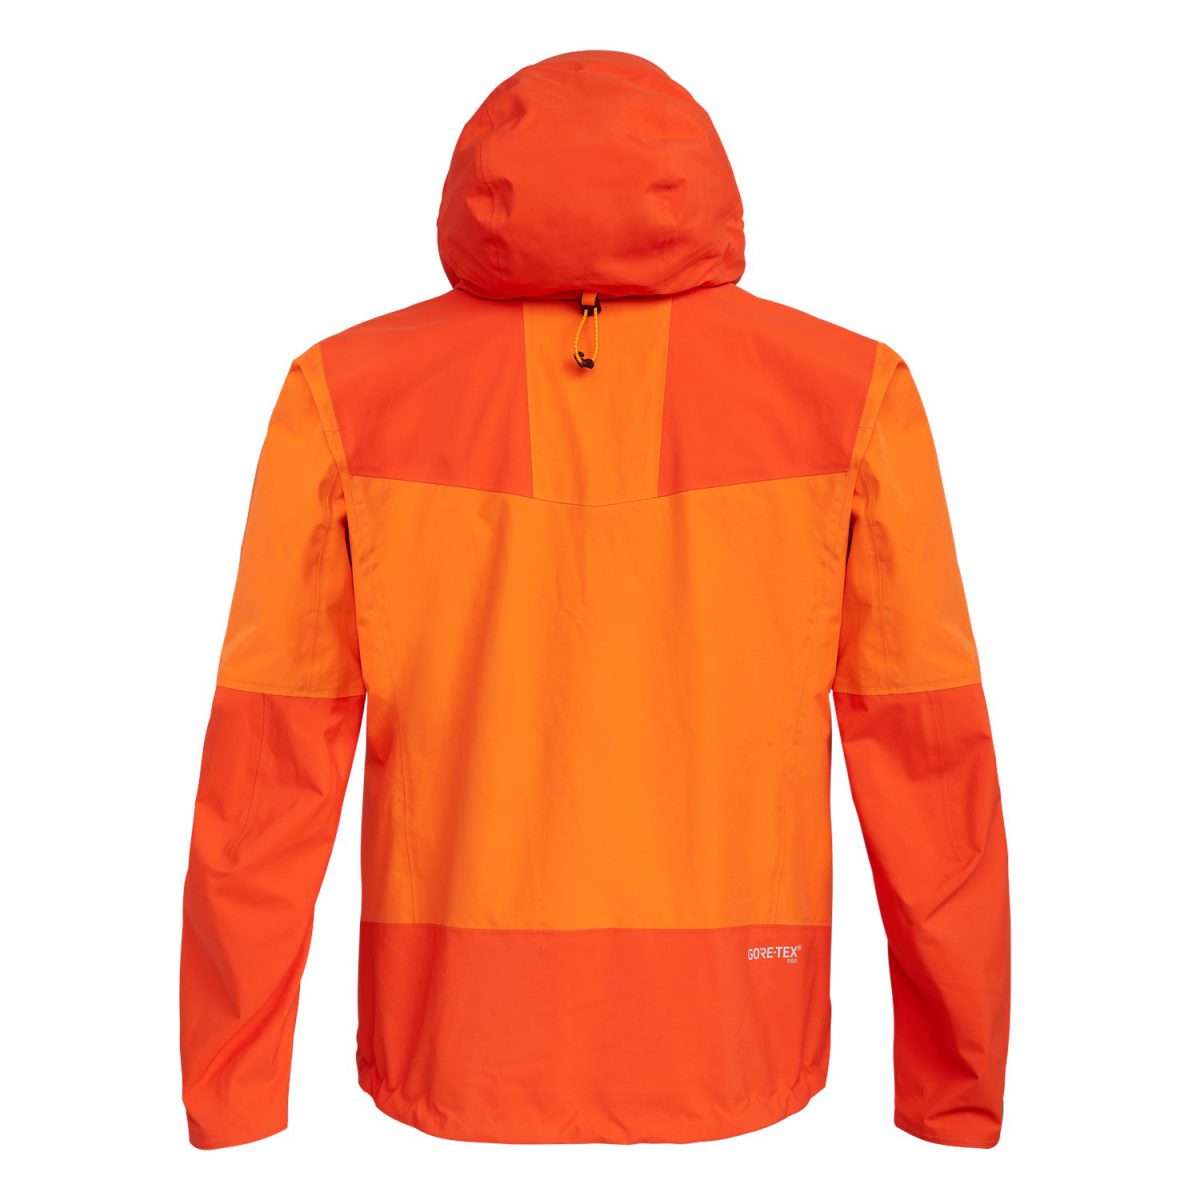 ORTLES 3 GORE-TEX PRO waterproof man jacket orange for mountains